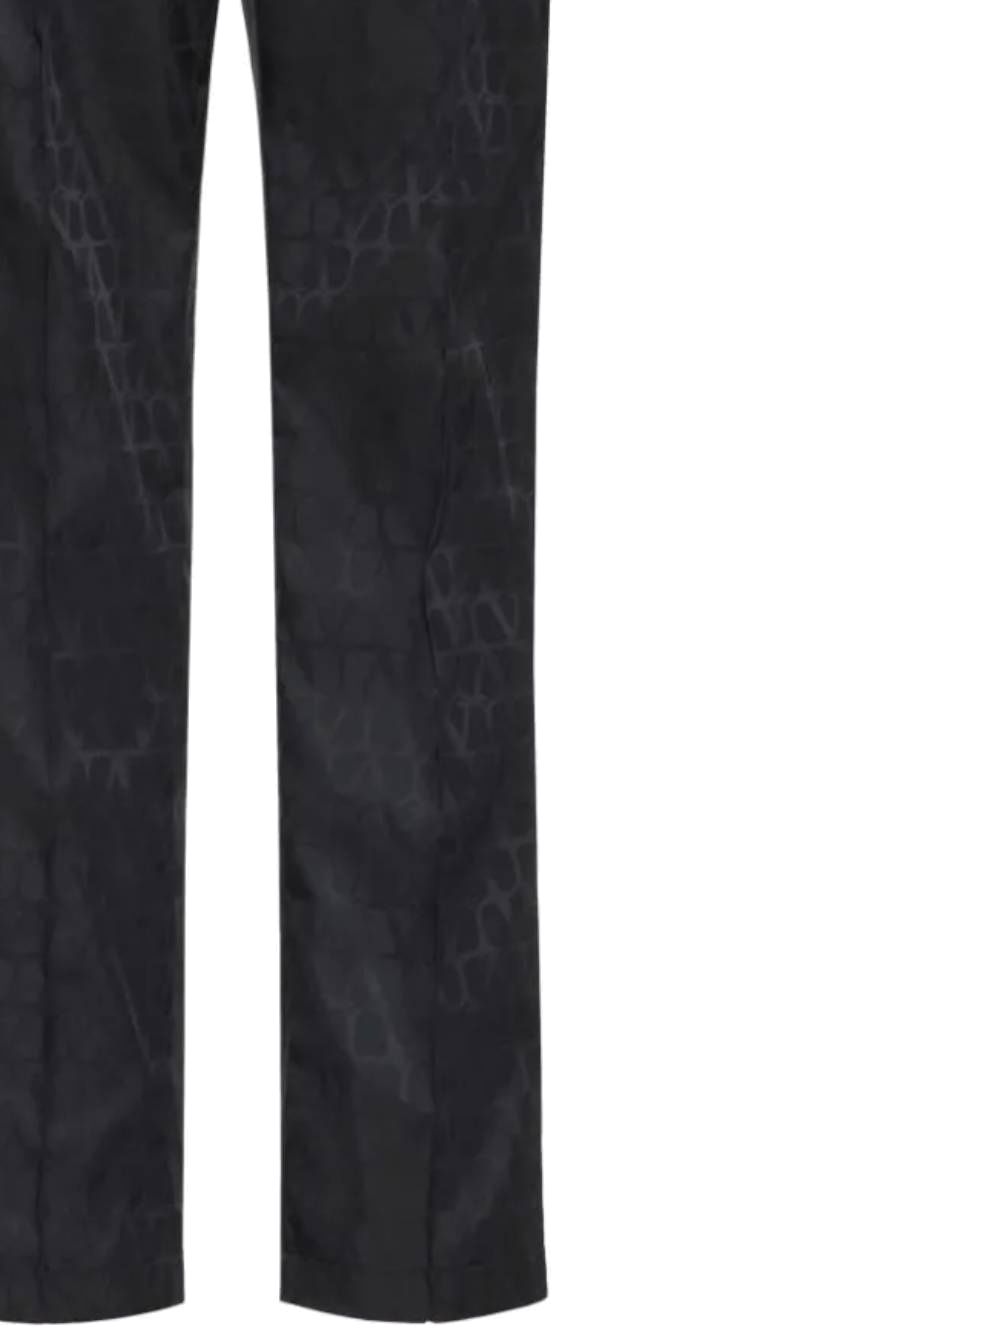 VLogo black monogram trousers